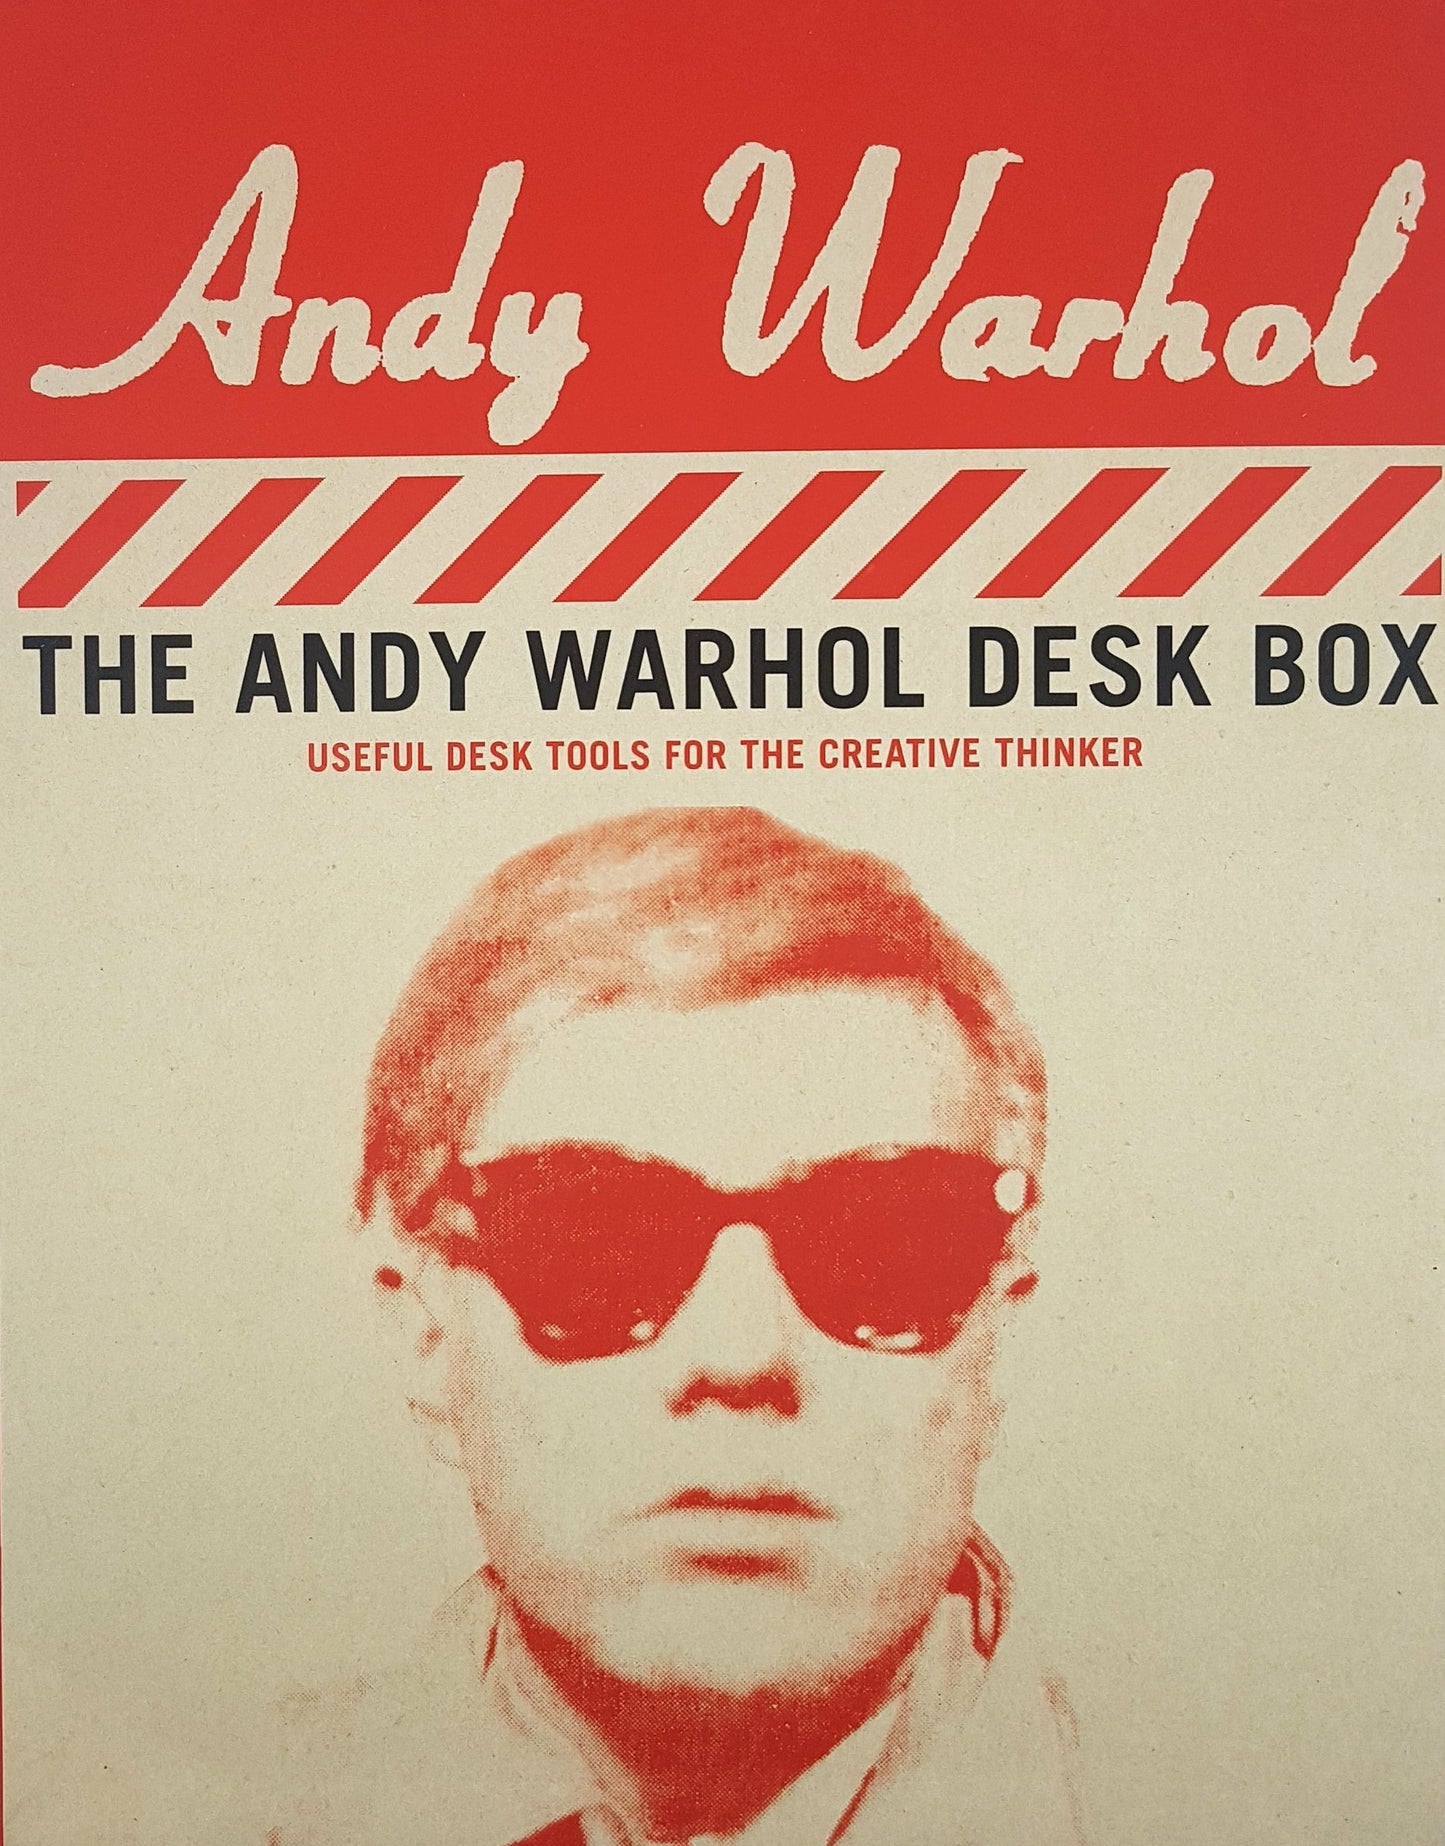 The Andy Warhol Desk Box